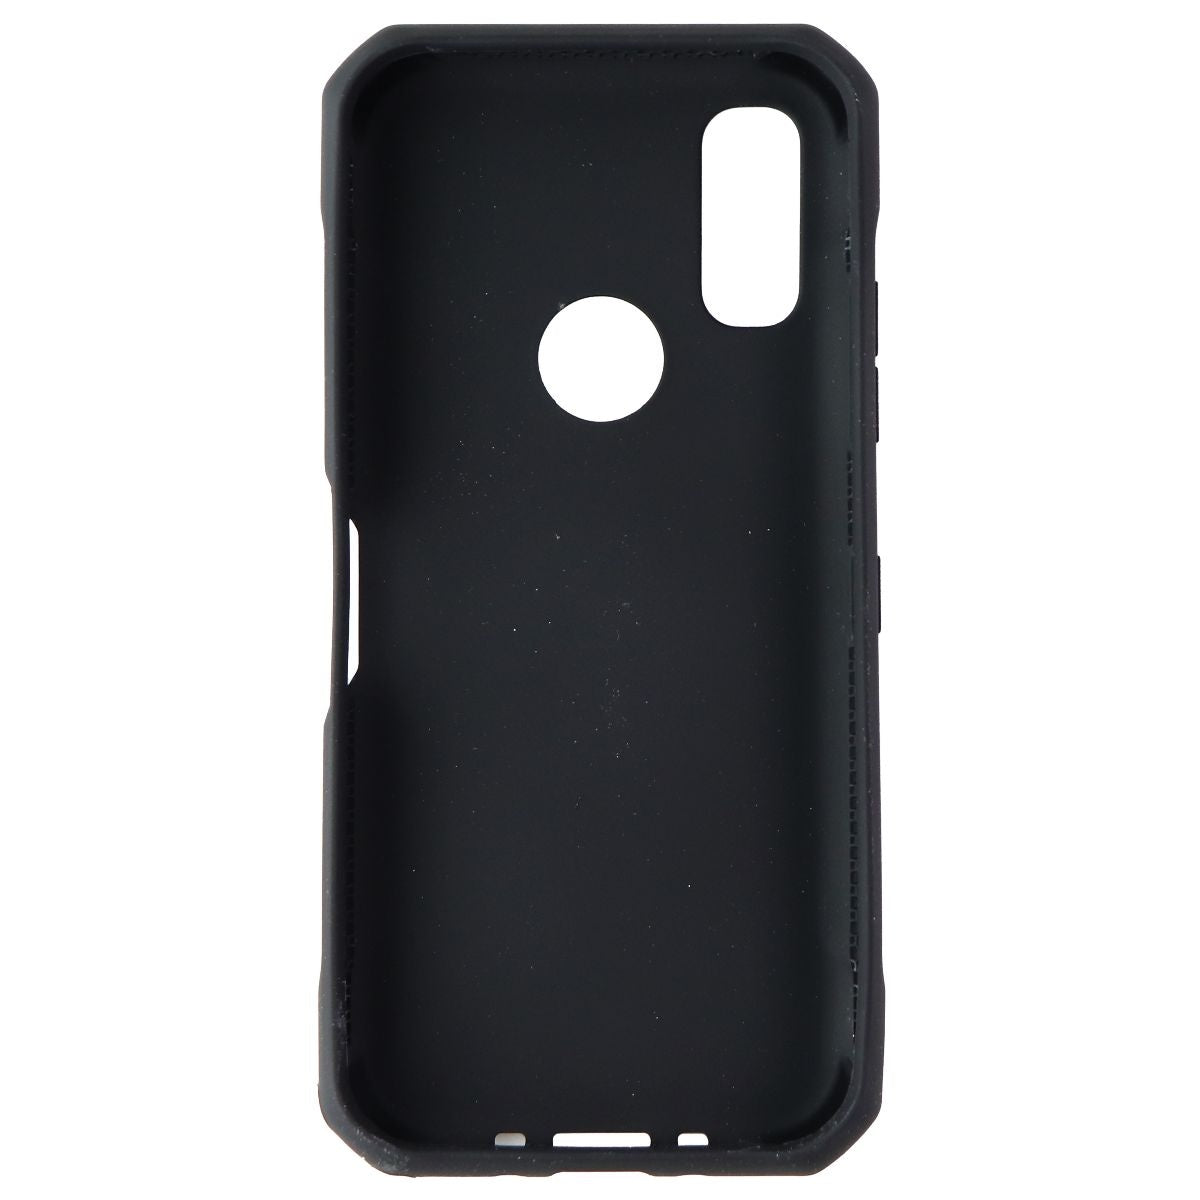 ITSKINS Spectrum Hybrid Silk Phone Case for Kyocera Durasport 5G - Black Cell Phone - Cases, Covers & Skins ITSKINS    - Simple Cell Bulk Wholesale Pricing - USA Seller